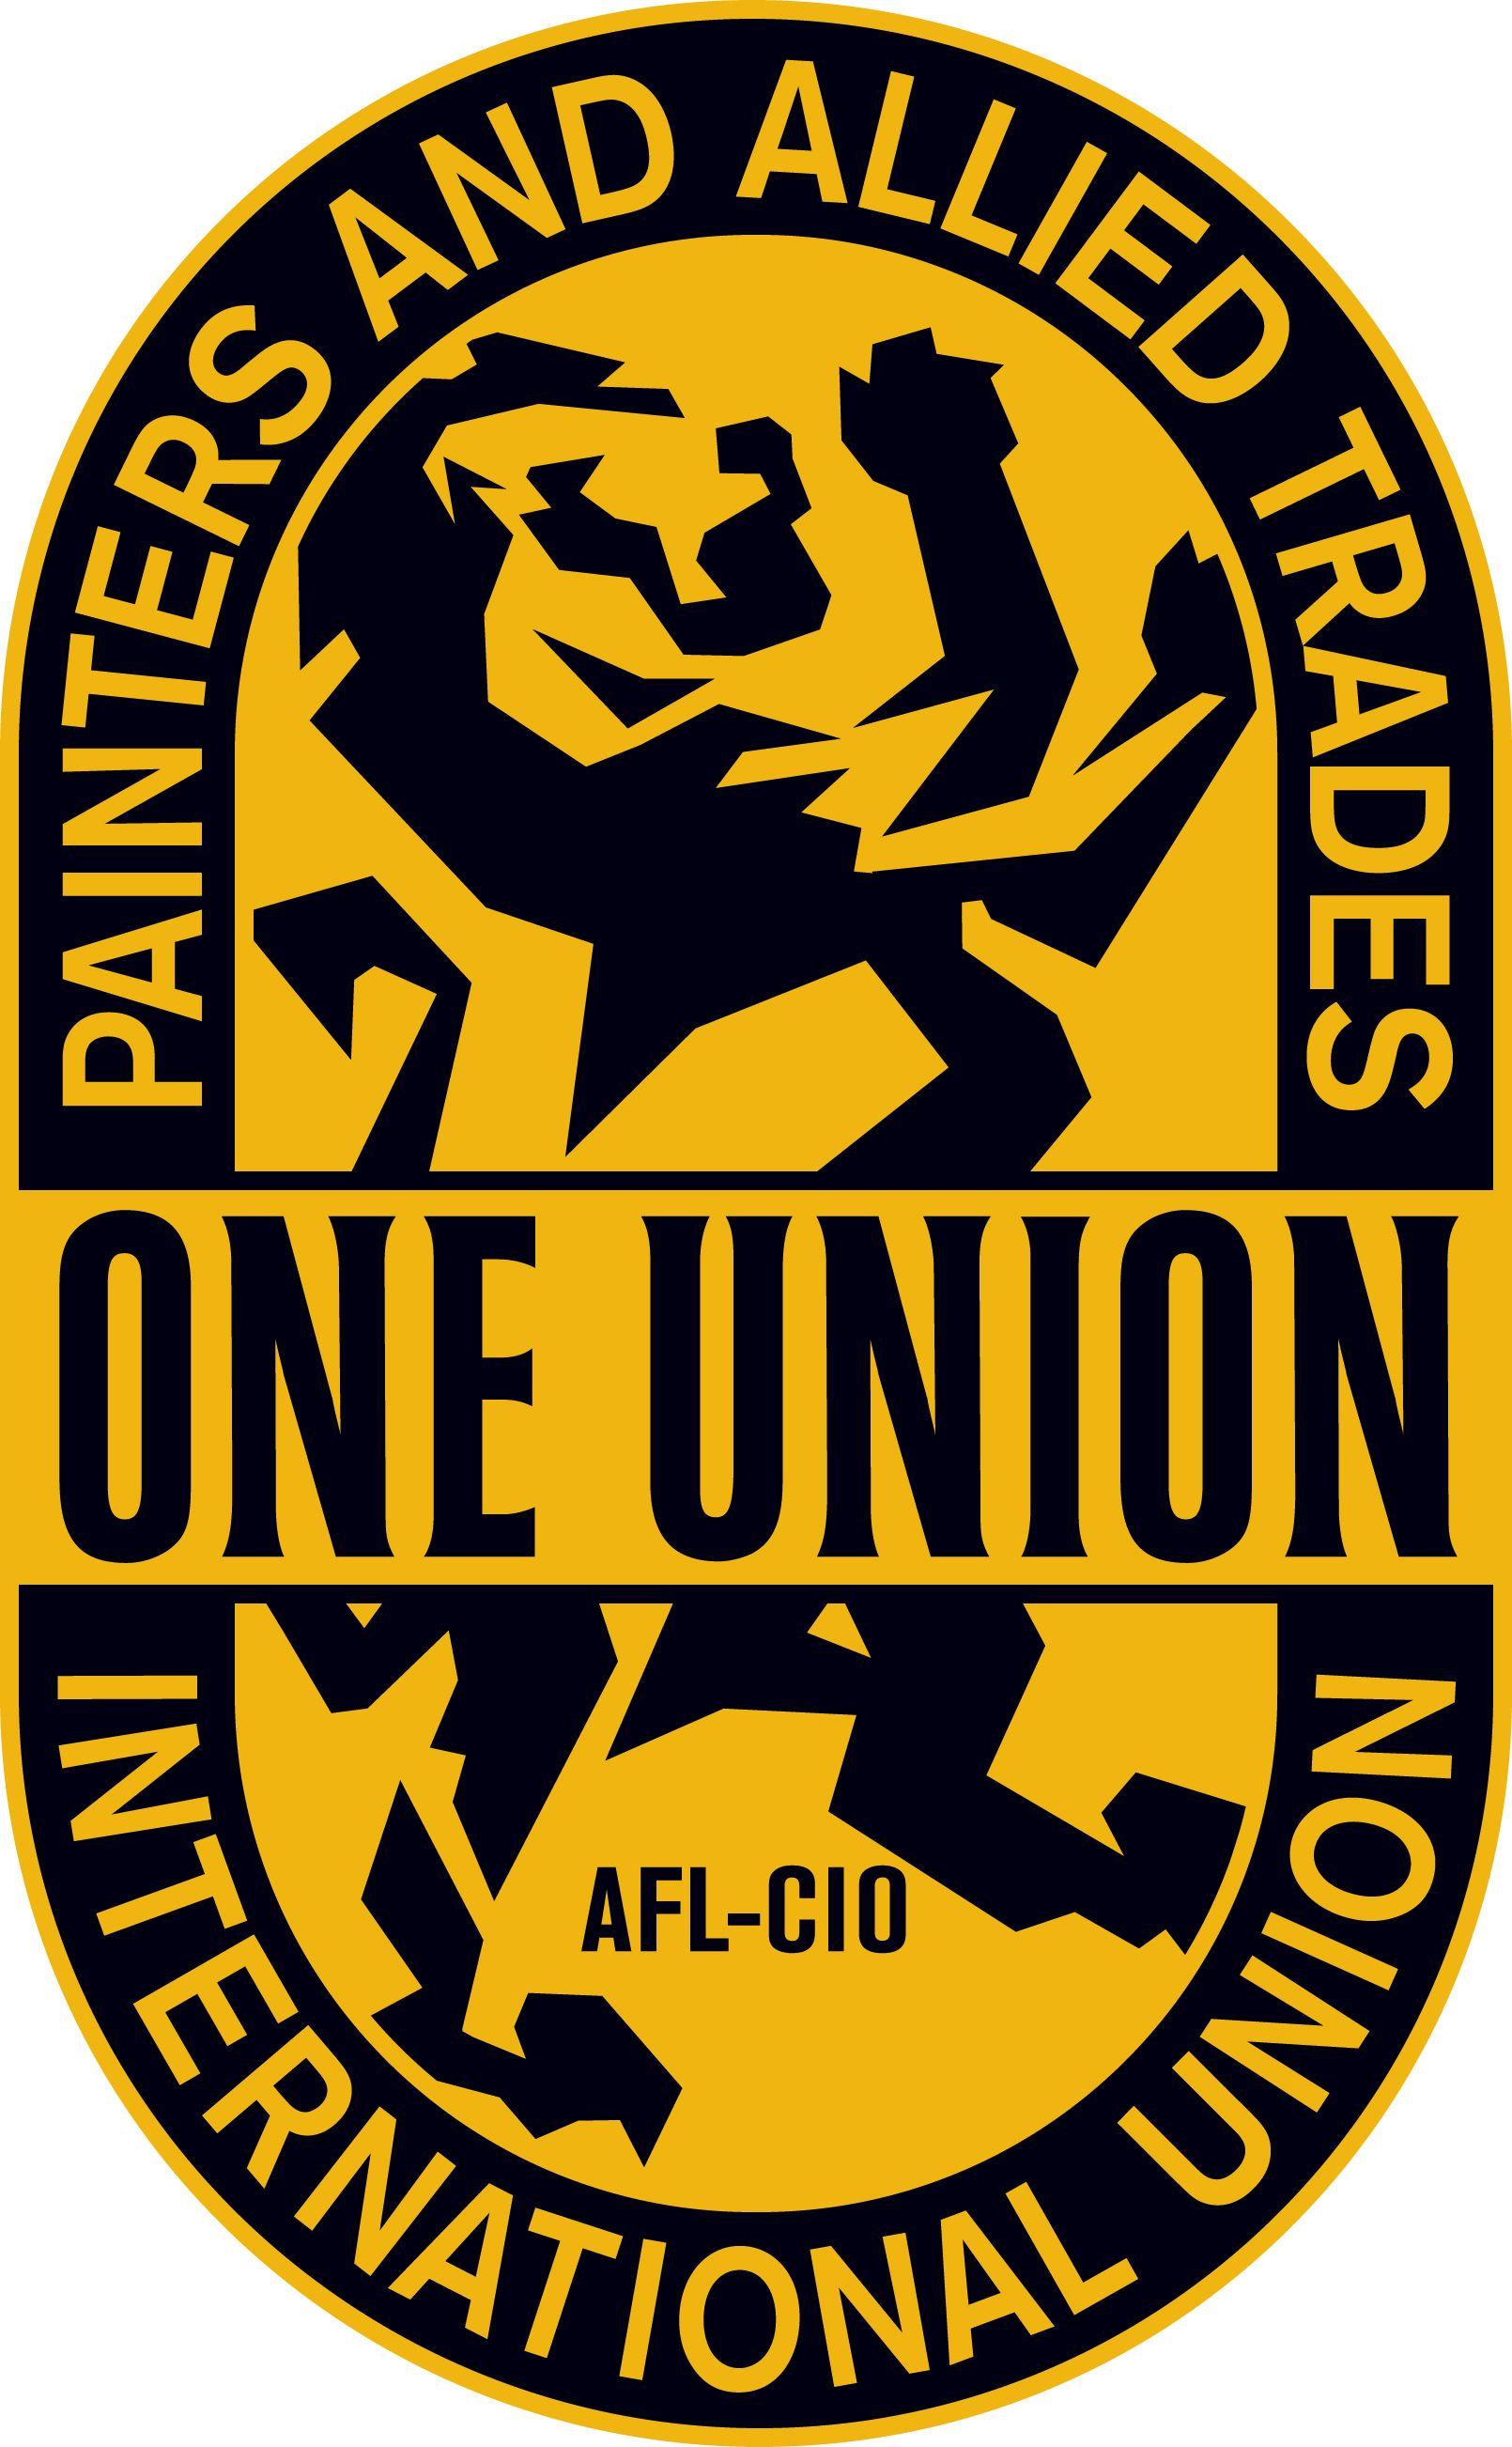 Uninion Logo - IUPAT International Union of Painters and Allied Trades